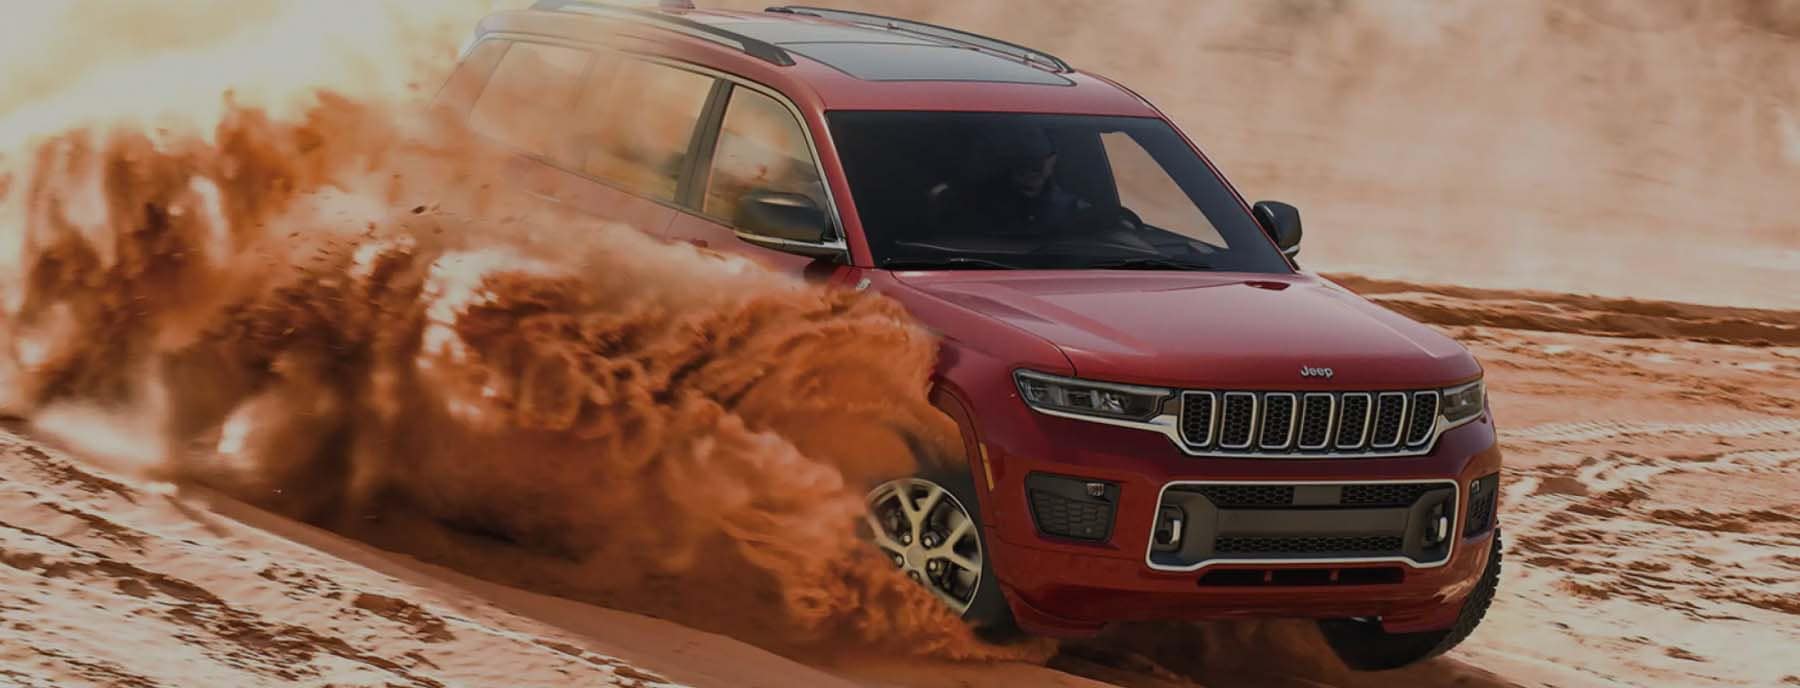 red jeep driving through desert sand